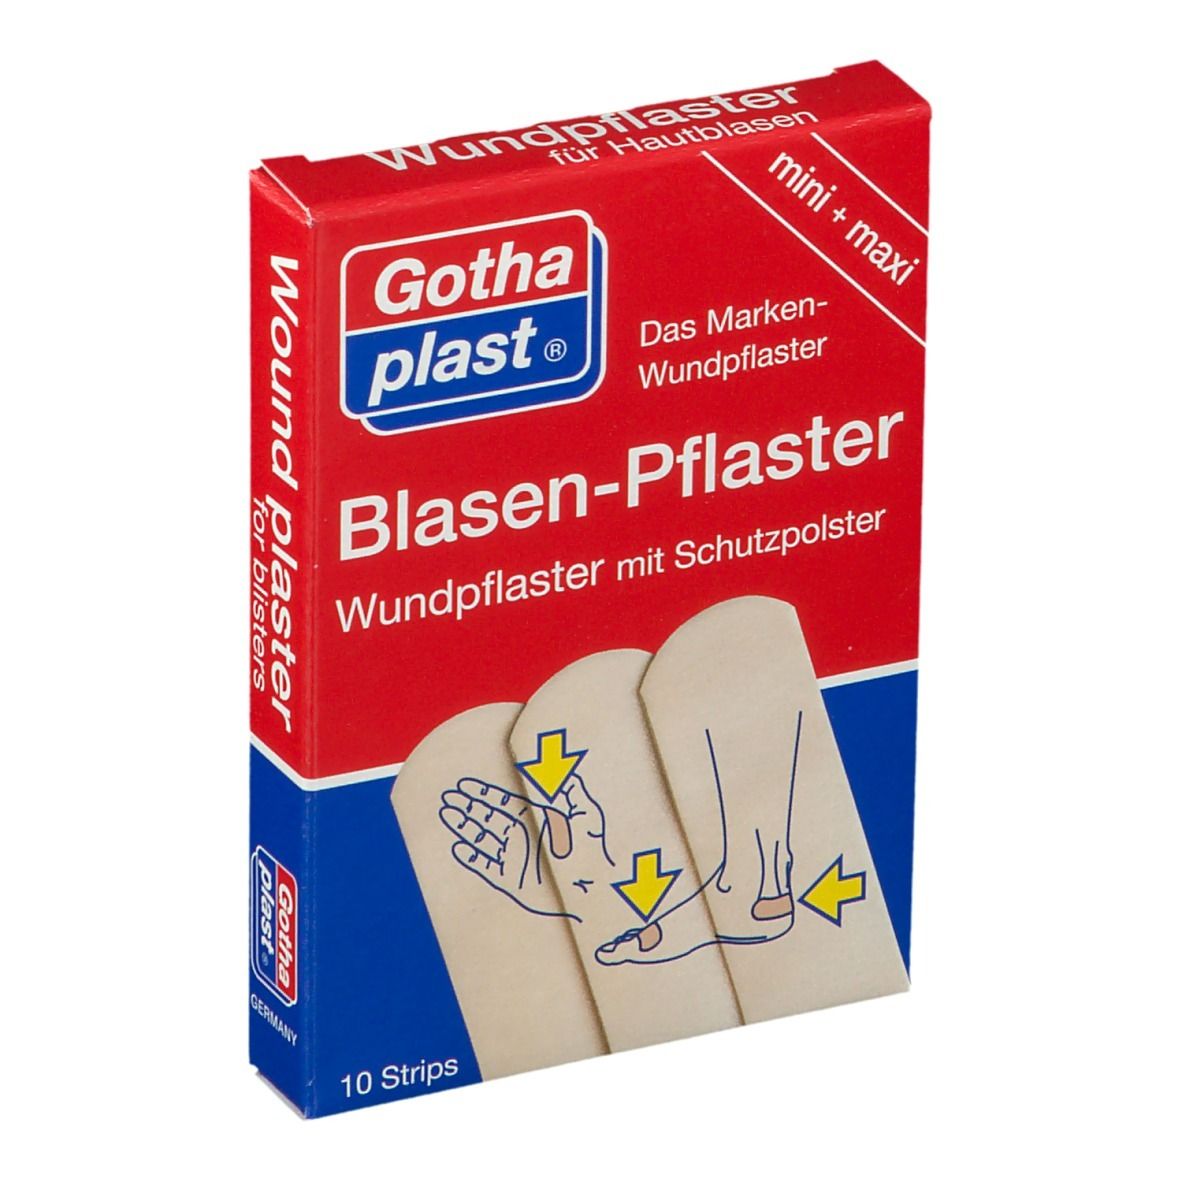 Image of GothaPlast® Blasenpflaster